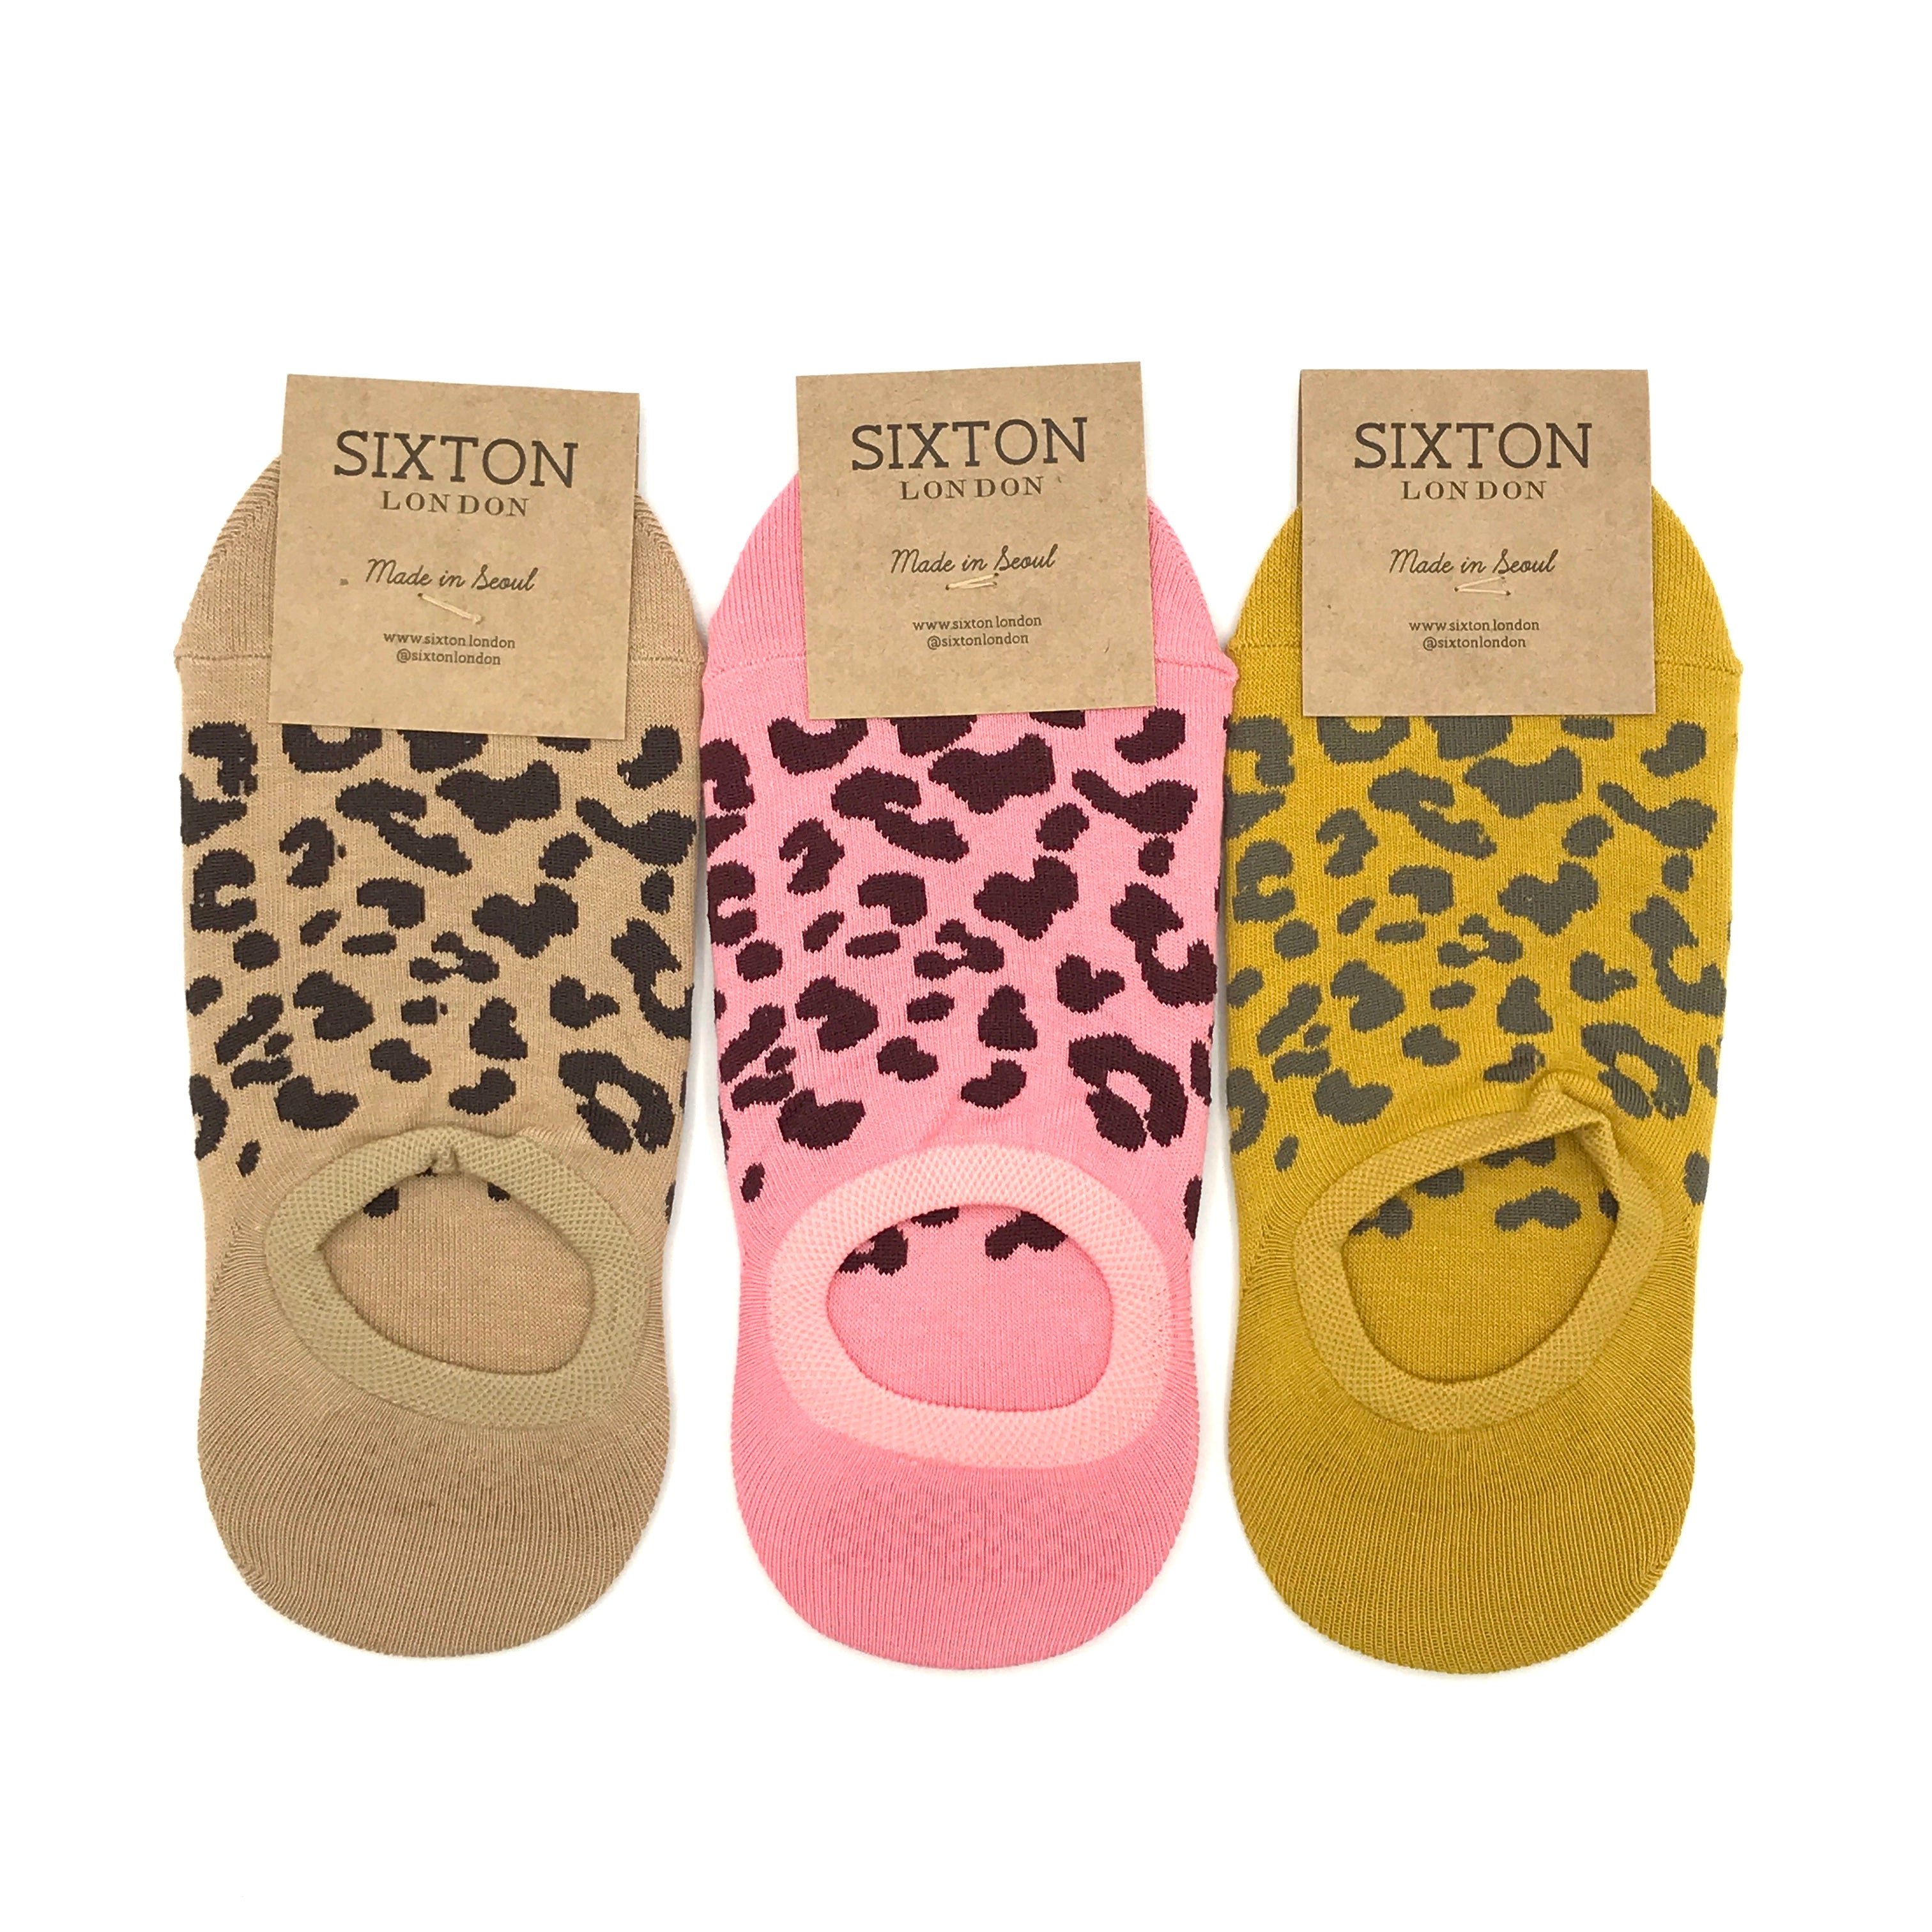 Socks – Sixton London